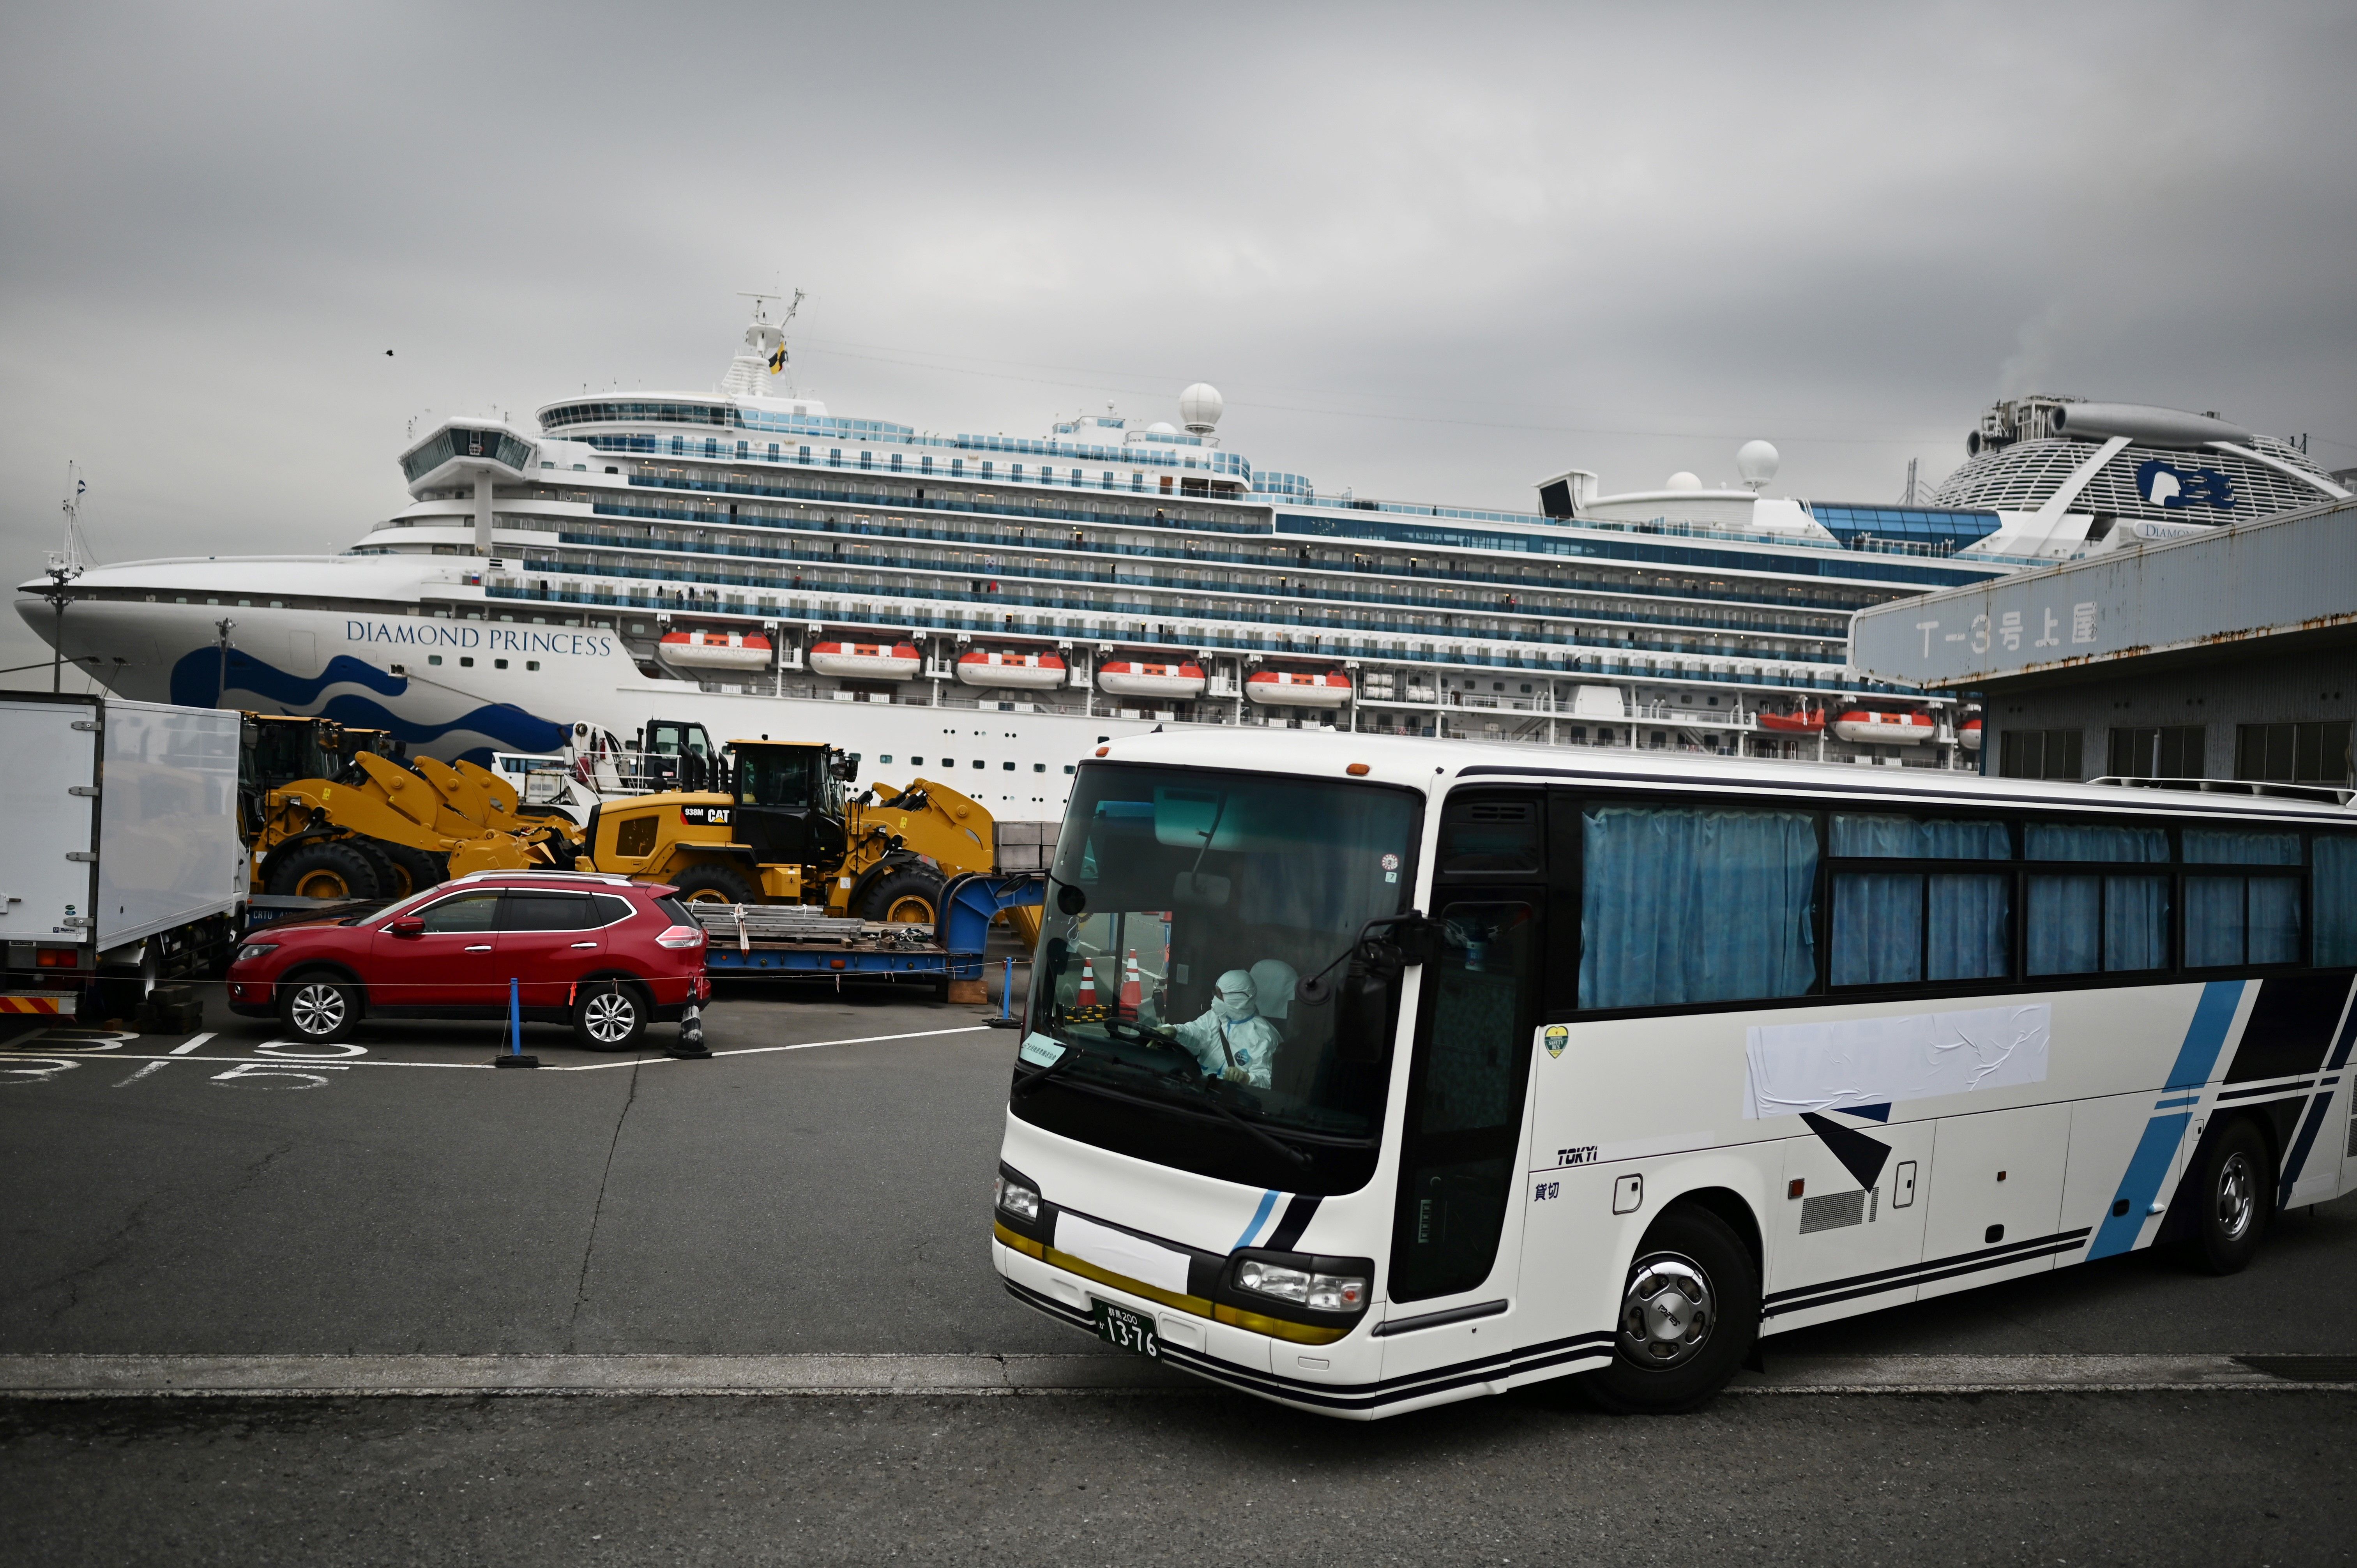 A bus next to the Diamond Princess cruise ship, docked under quarantine in Yokohama, Japan, on February 14, 2020.